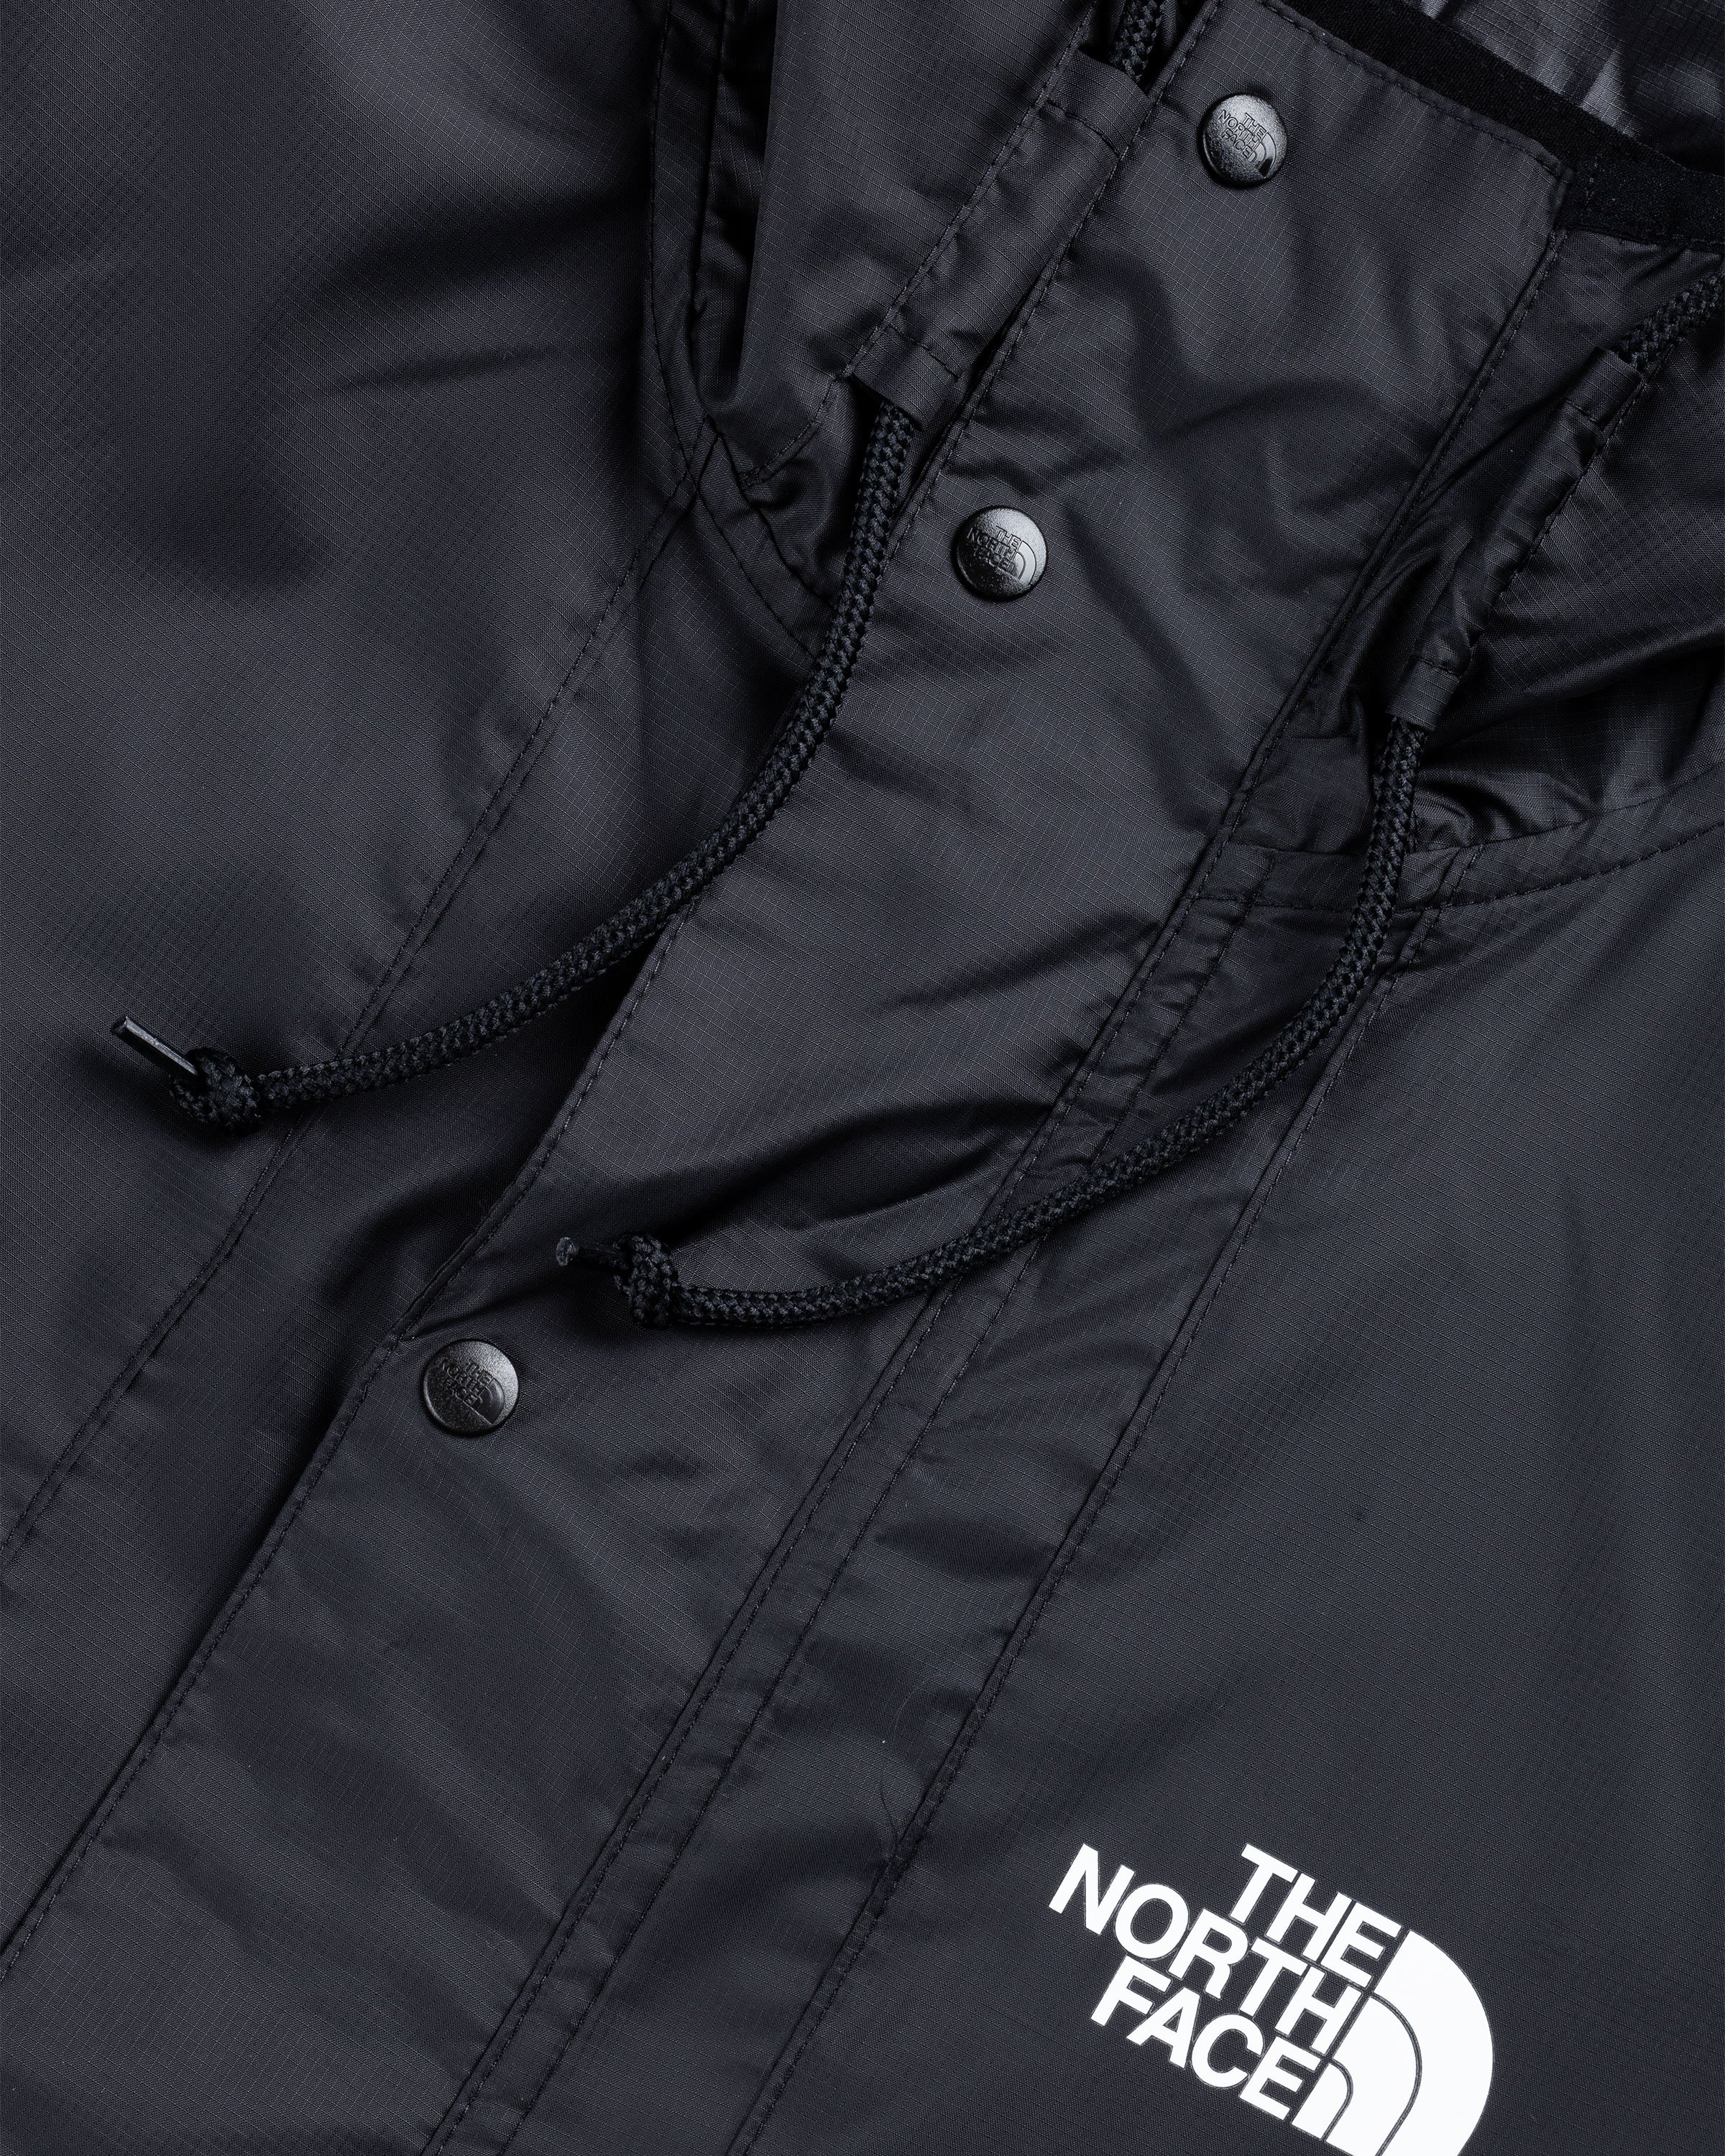 The North Face - Seasonal Mountain Jacket TNF Black - Clothing - Black - Image 5